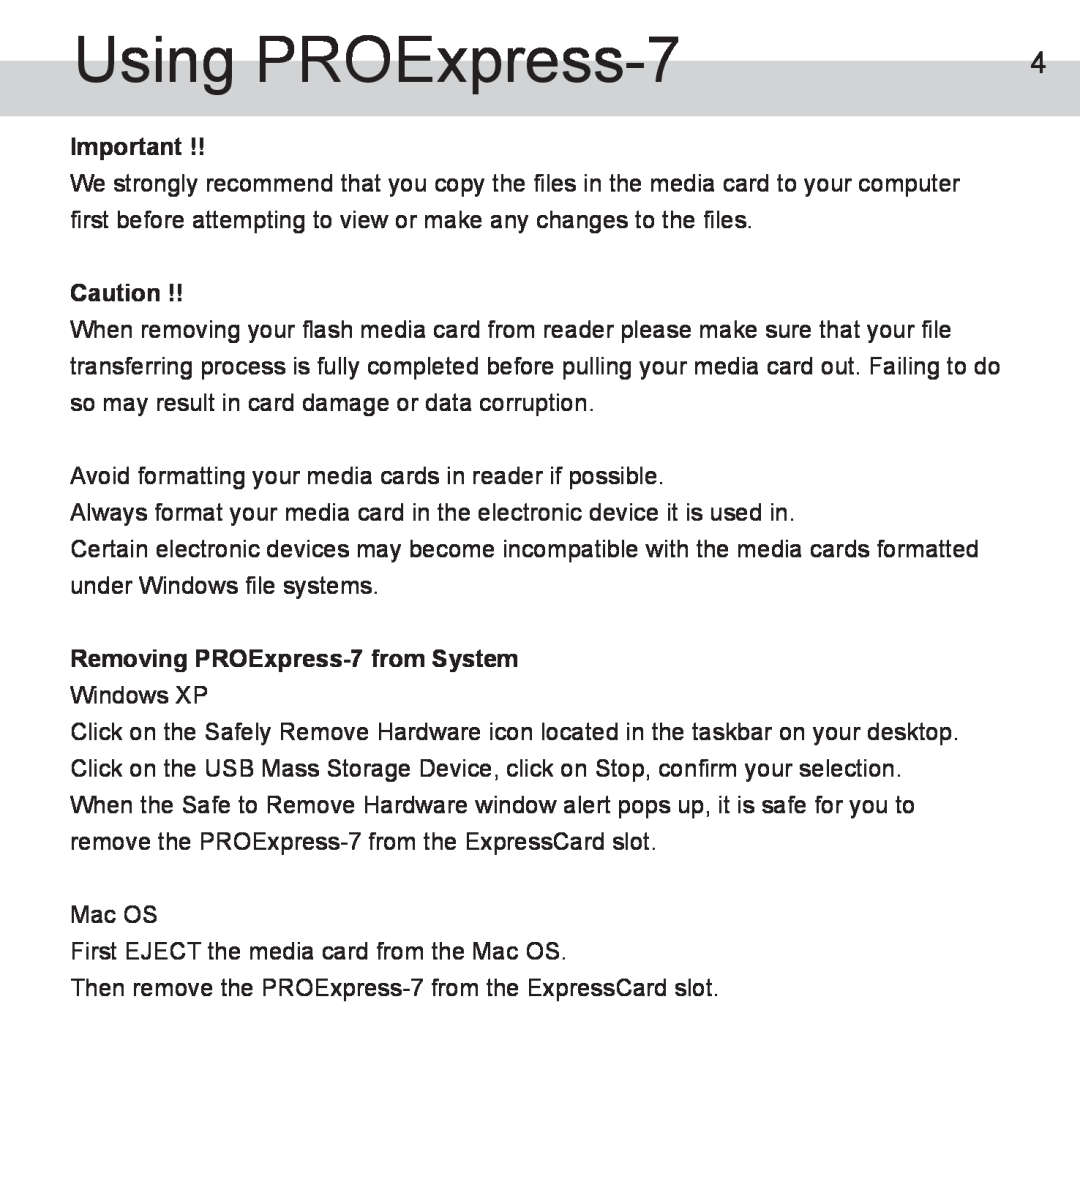 Atech Tech manual Removing PROExpress-7 from System, Using PROExpress-7 